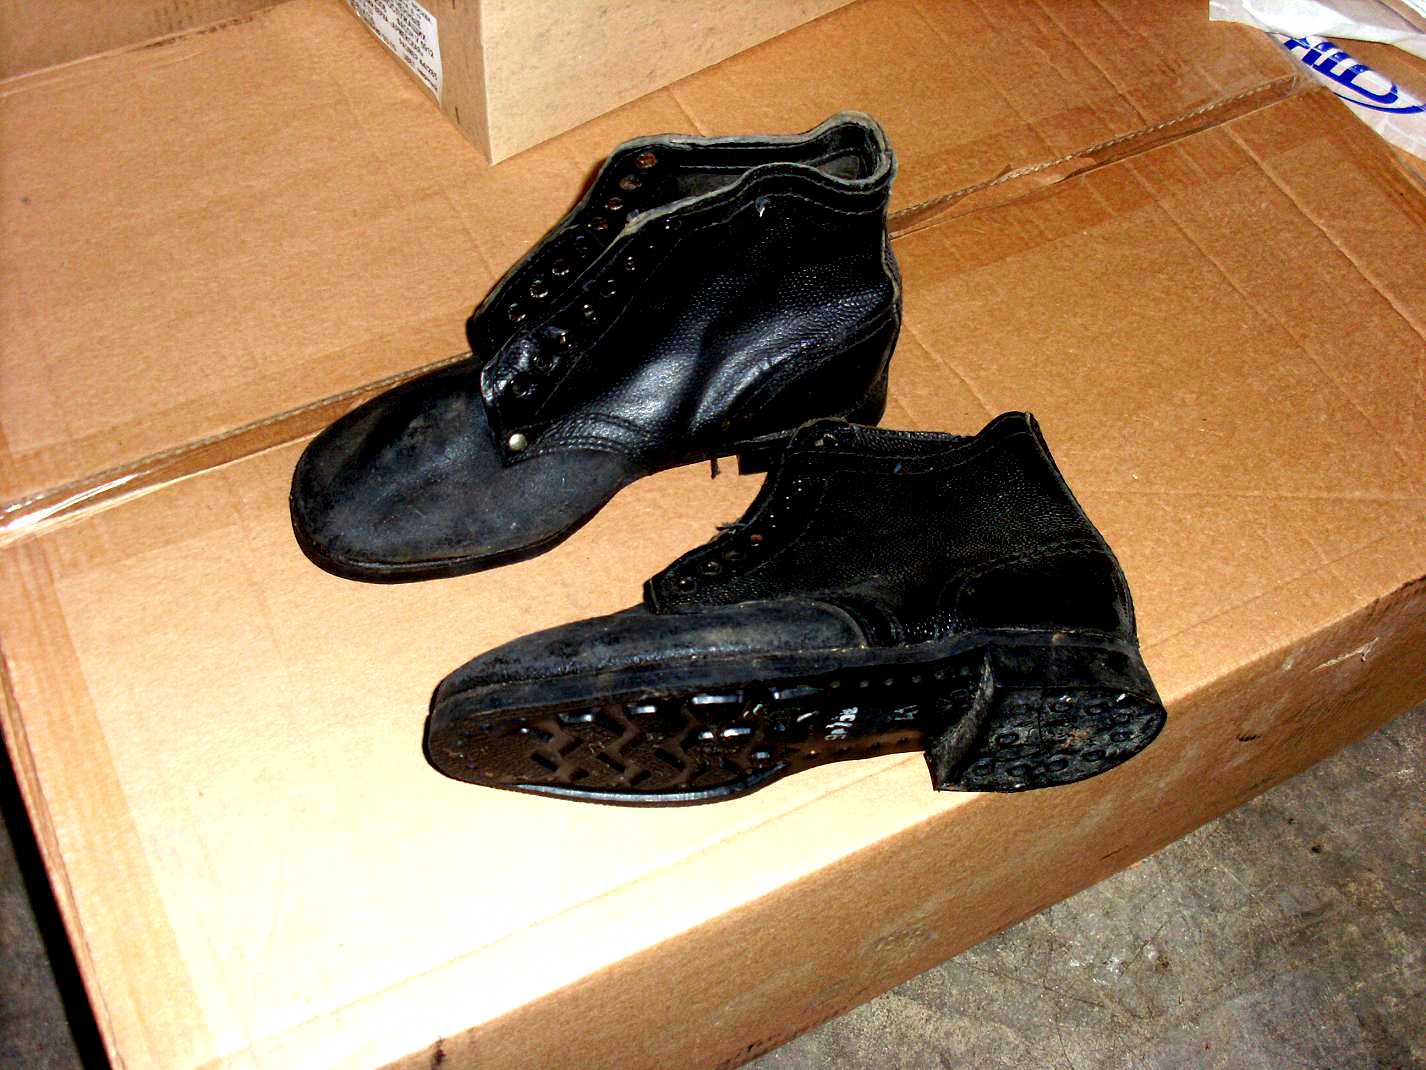 Обувь моряка